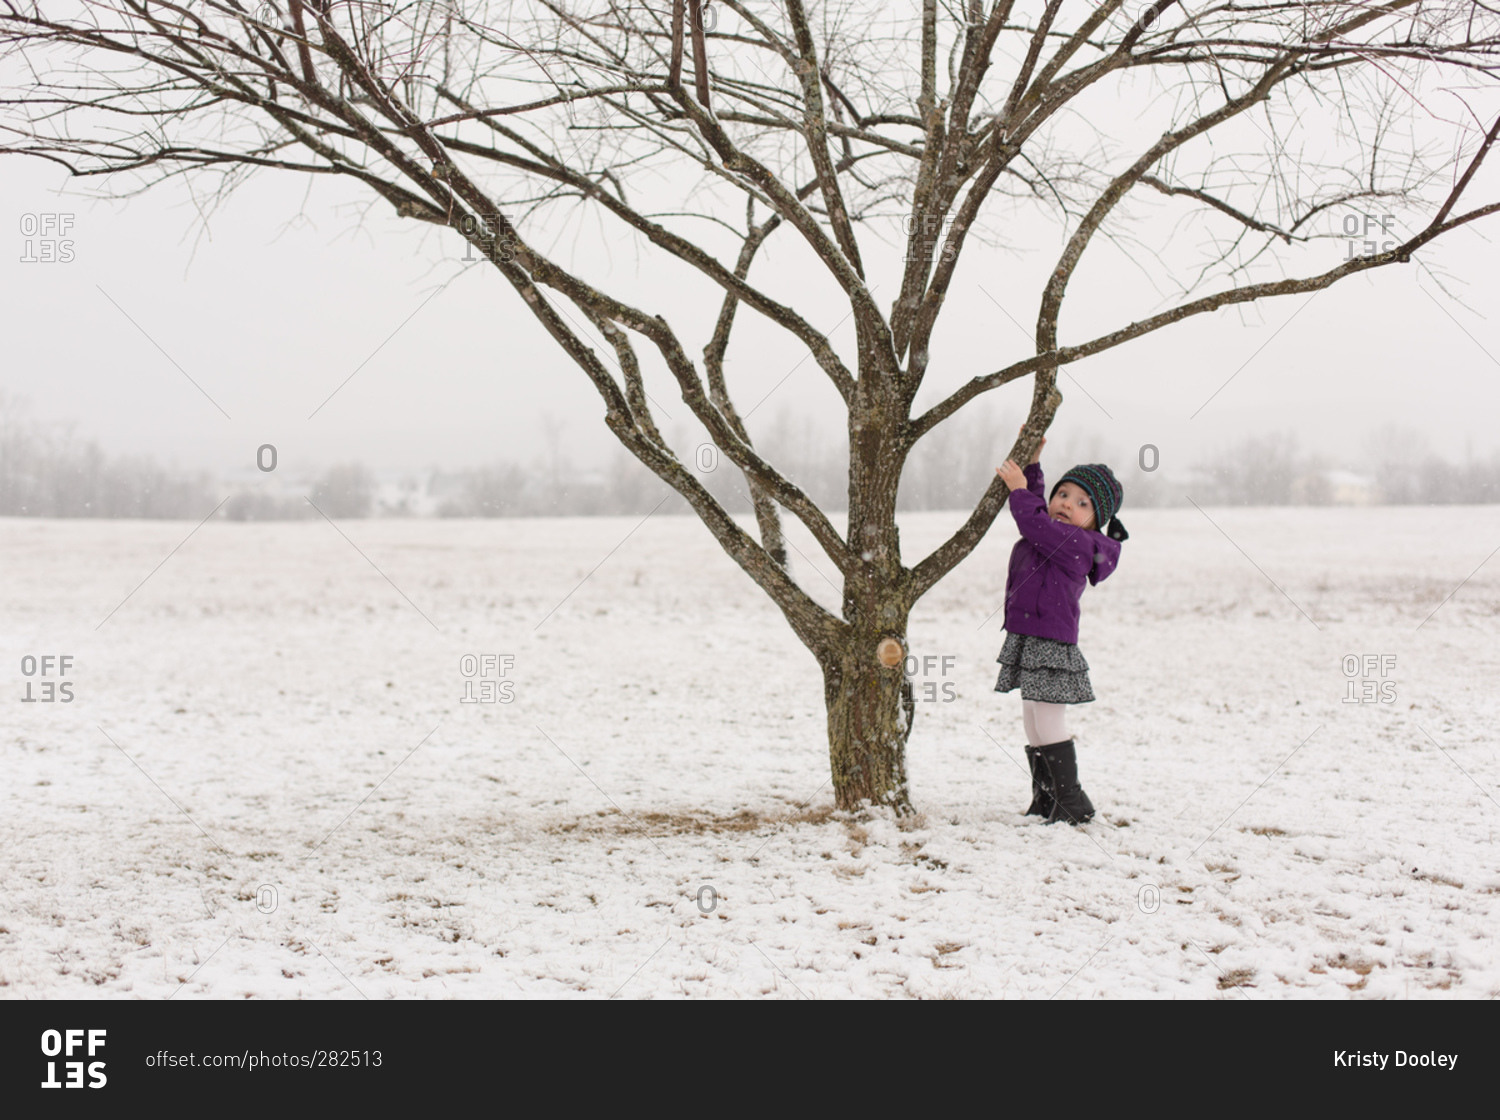 Girl climbing a tree in winter snow